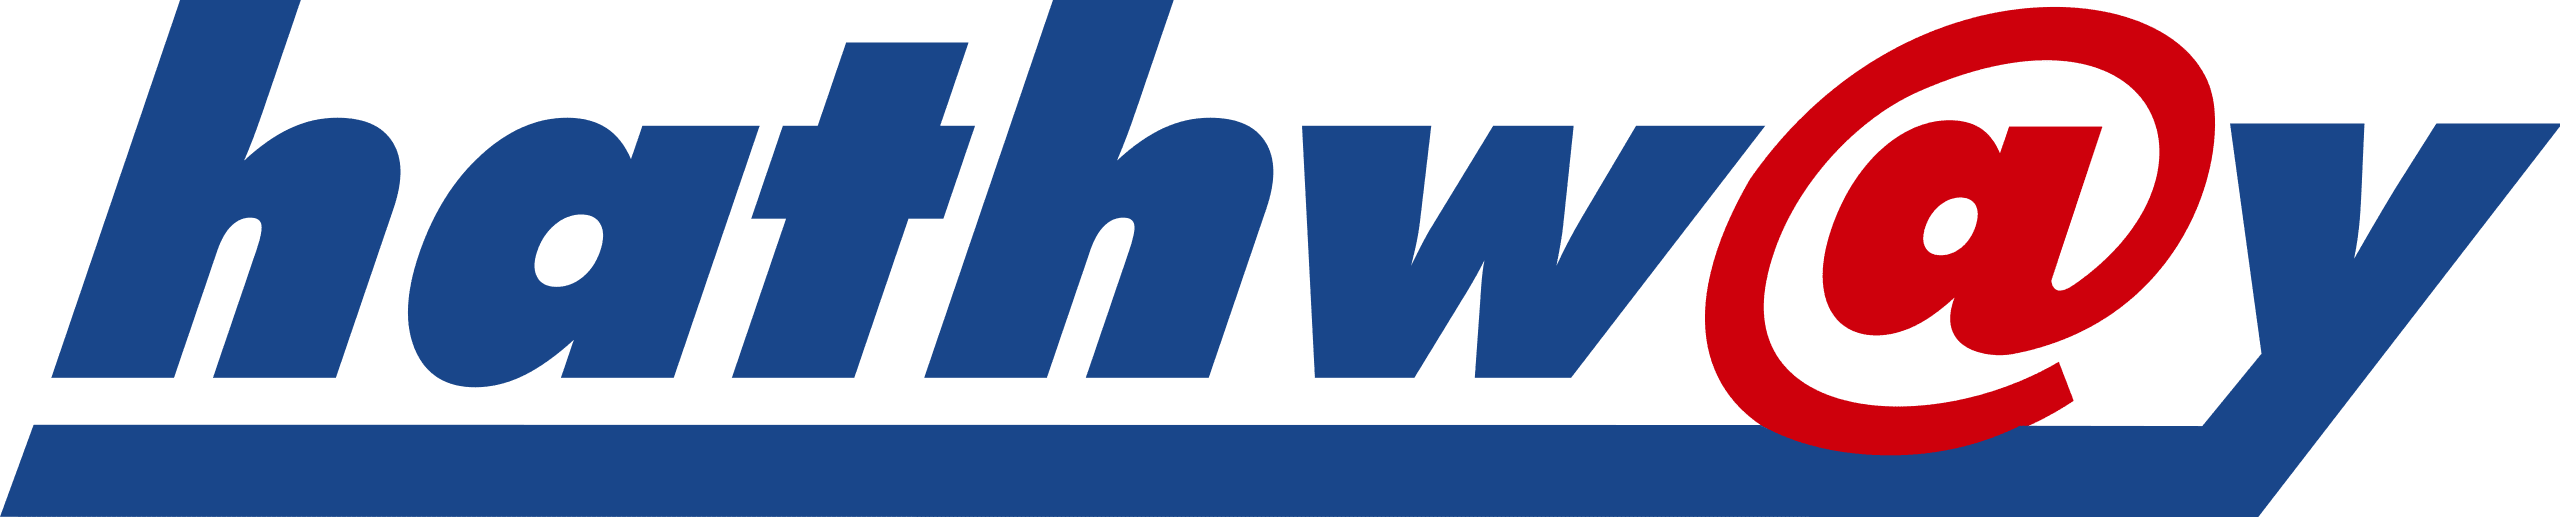 Hathway FiberMAX Broadband | Get New Internet Connection Now